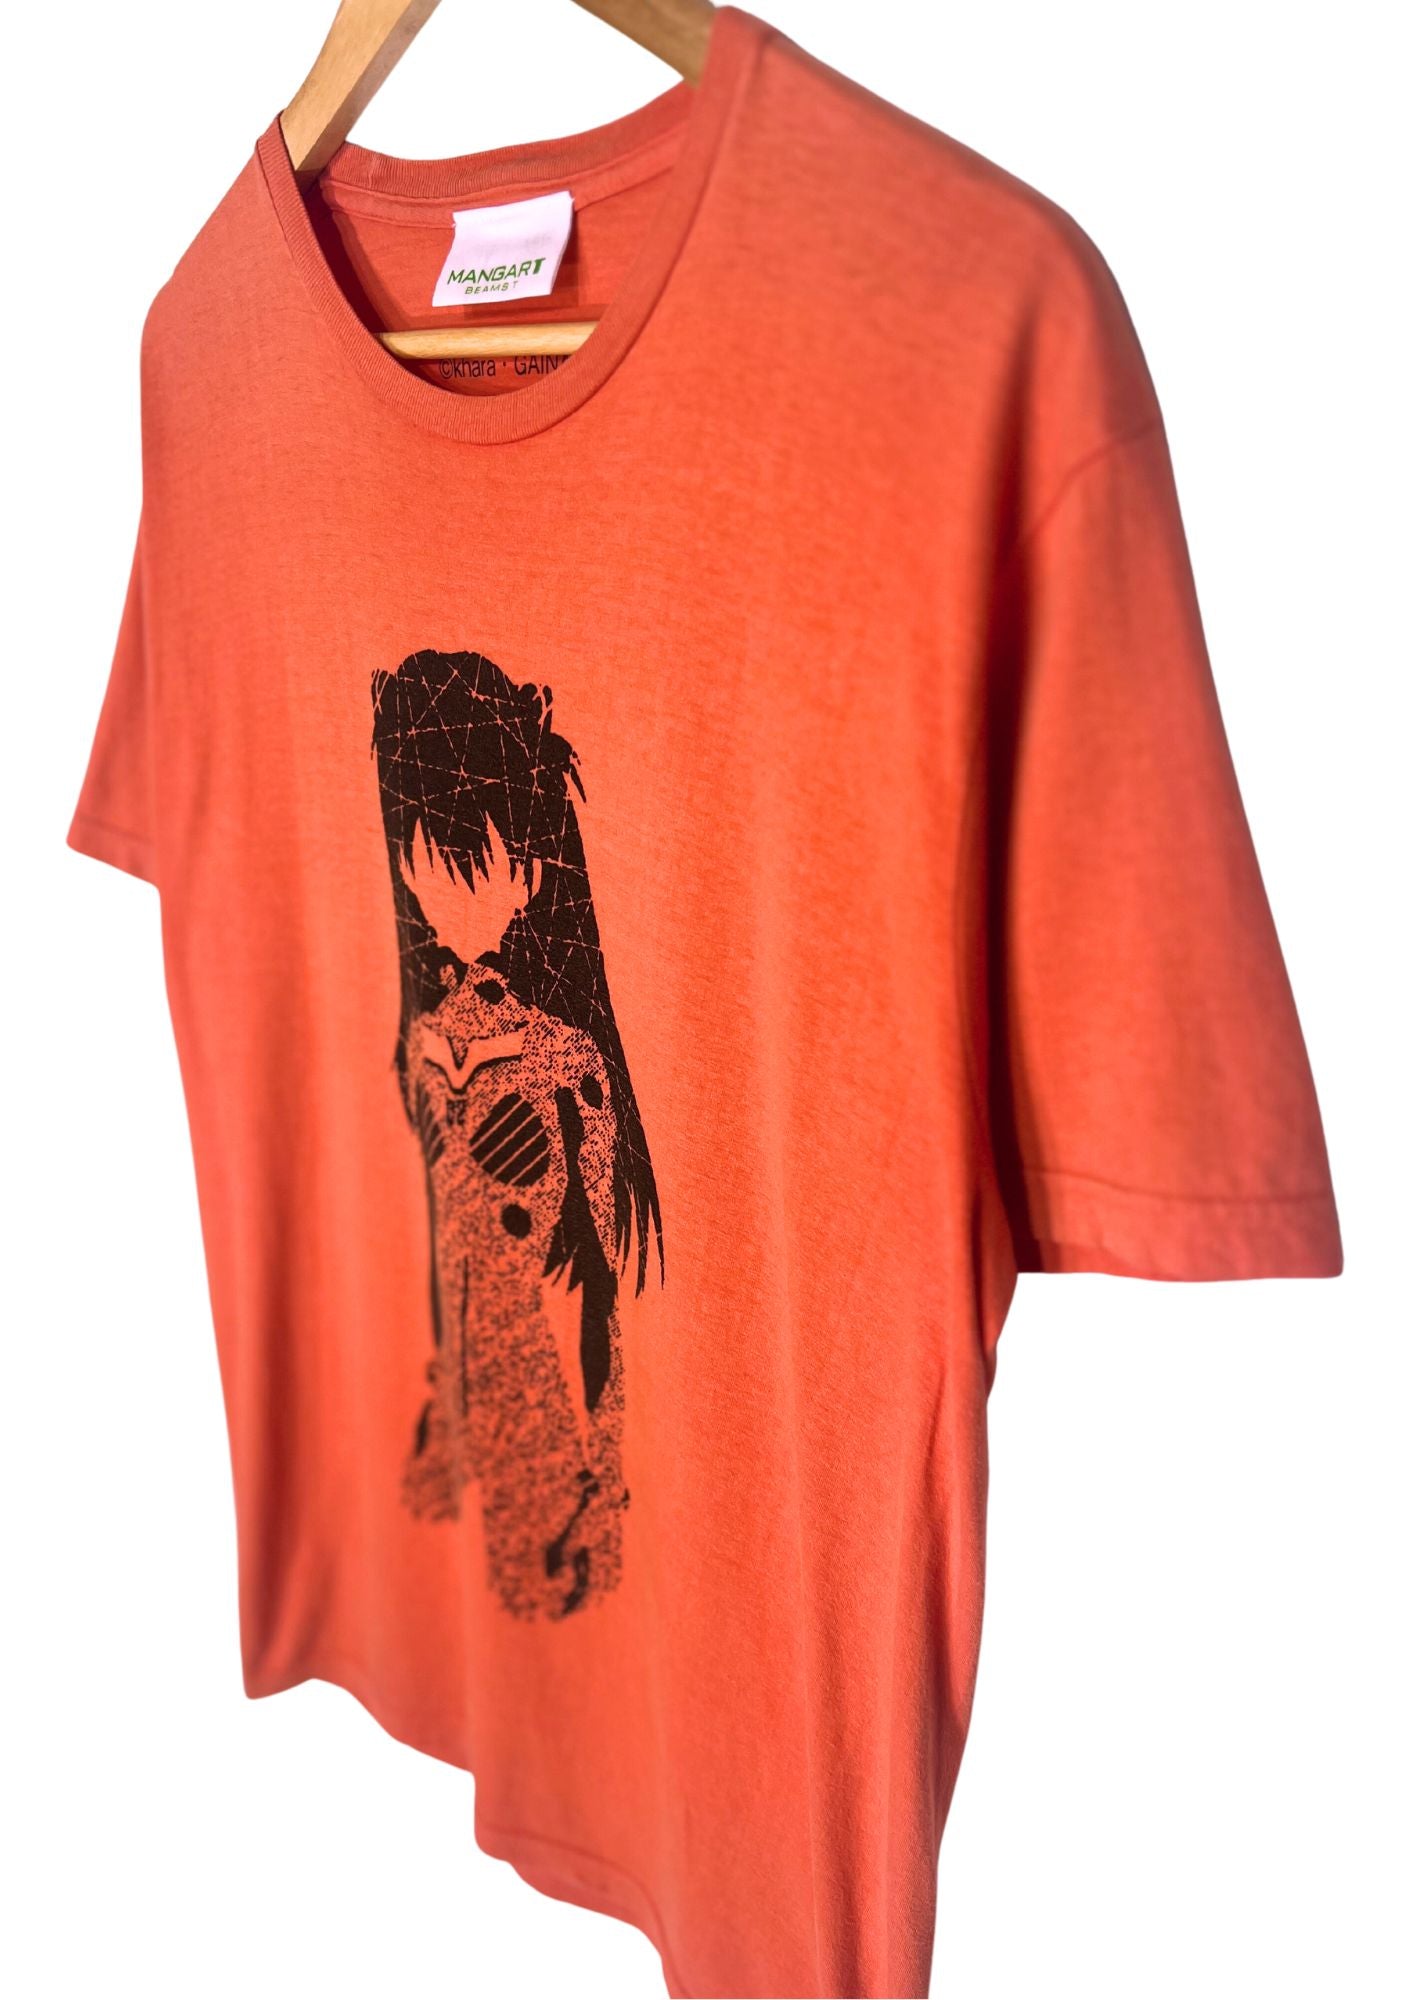 2010s Neon Genesis Evangelion x BEAMS MANGART Asuka T-shirt